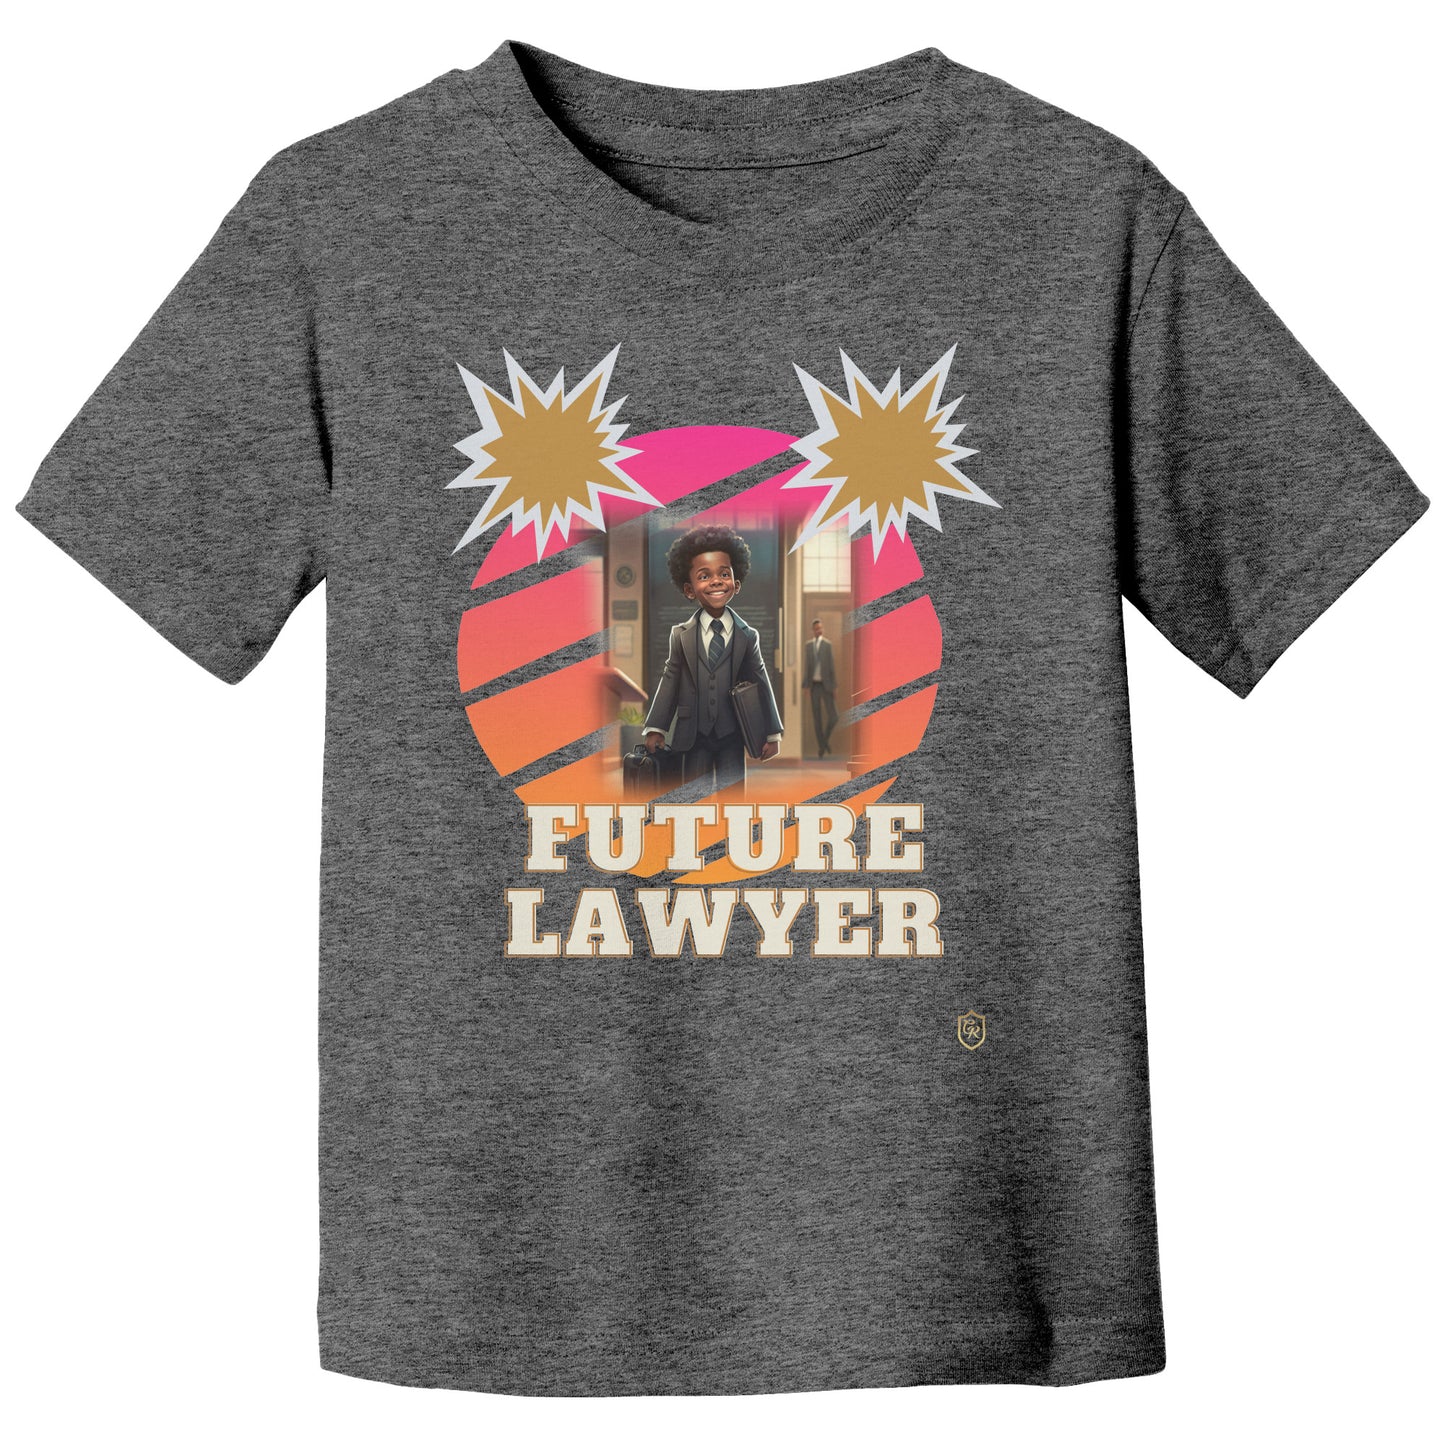 Boy's Future Lawyer T-shirt